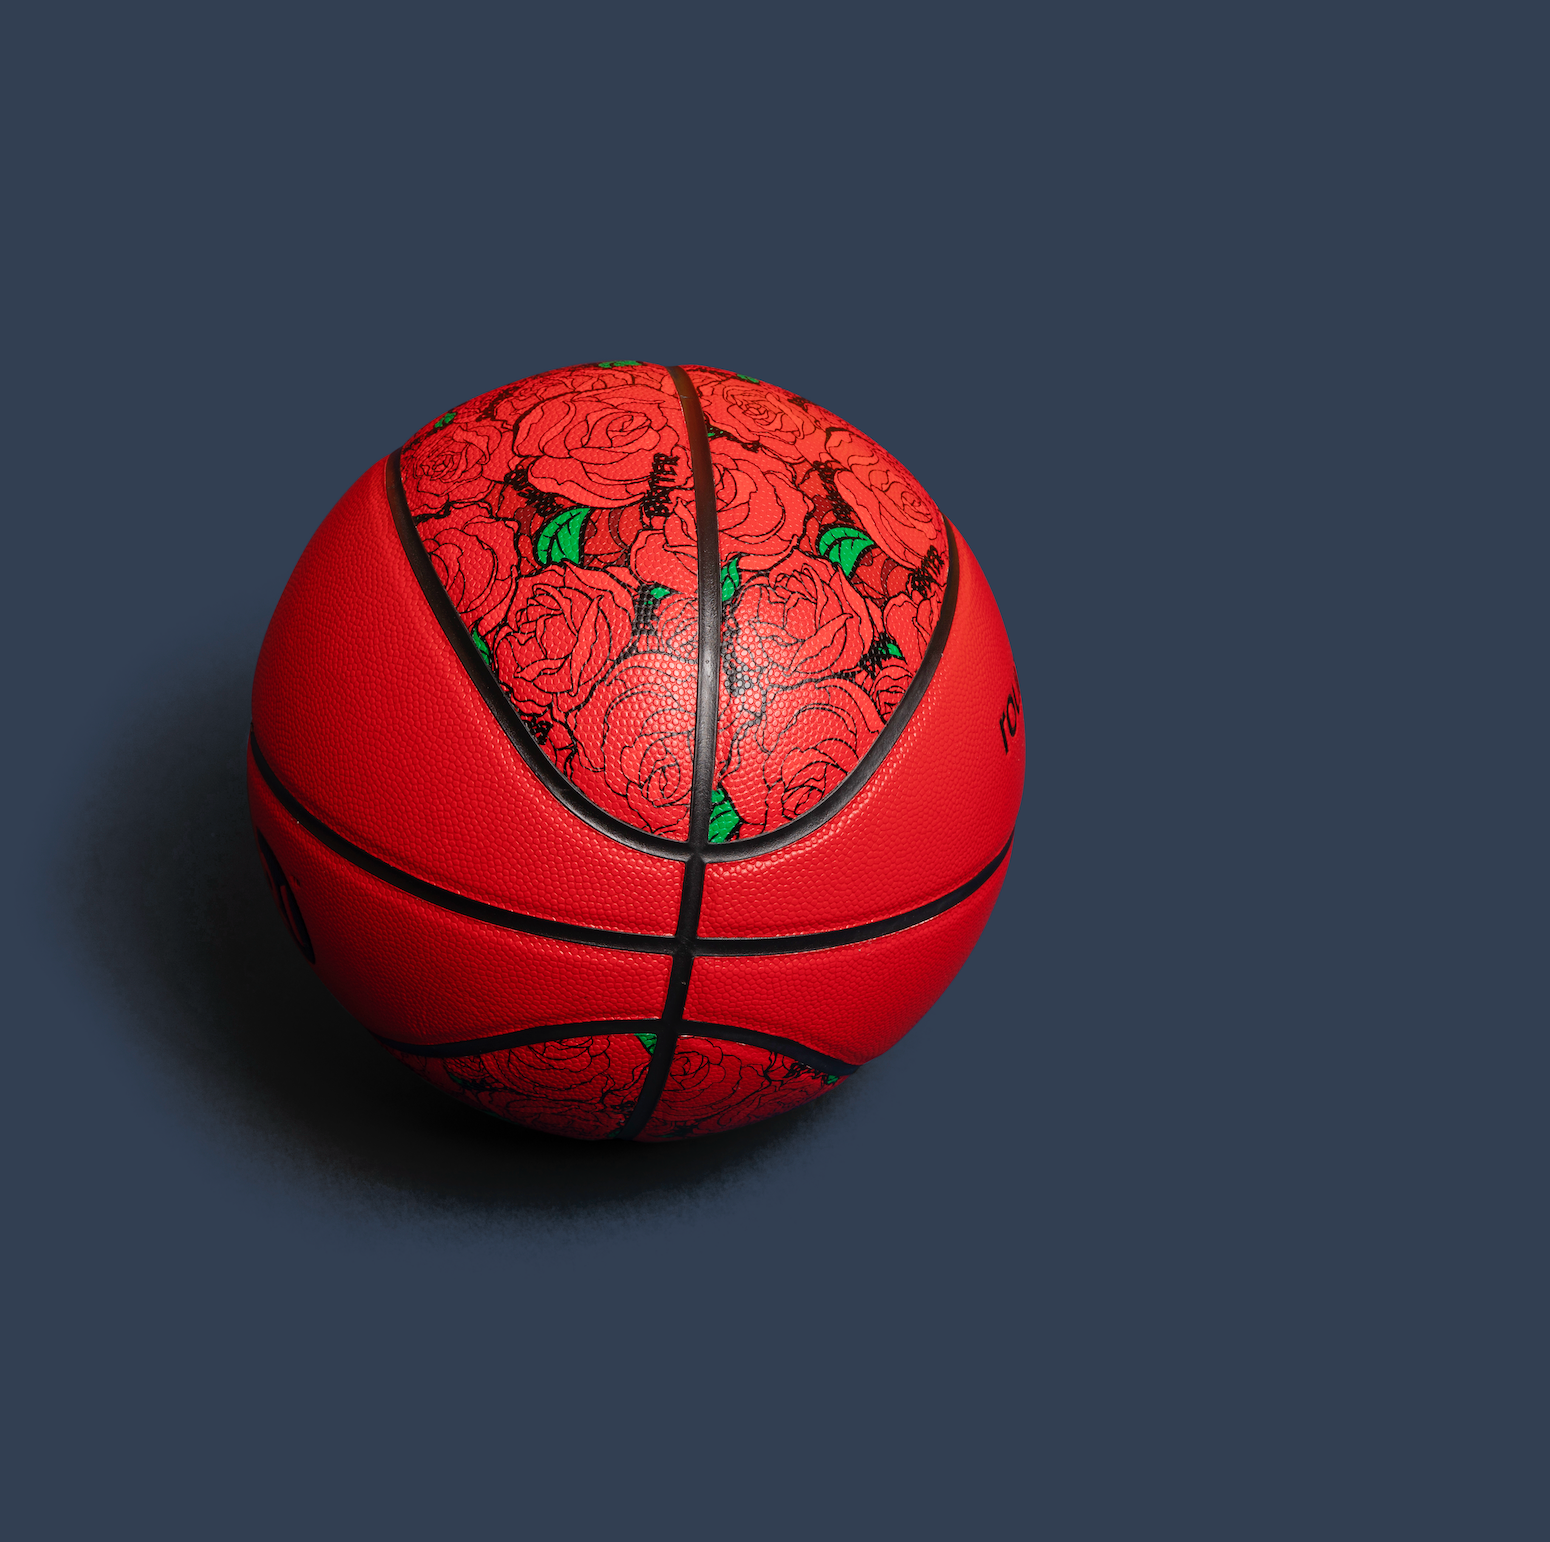 Roses basketball